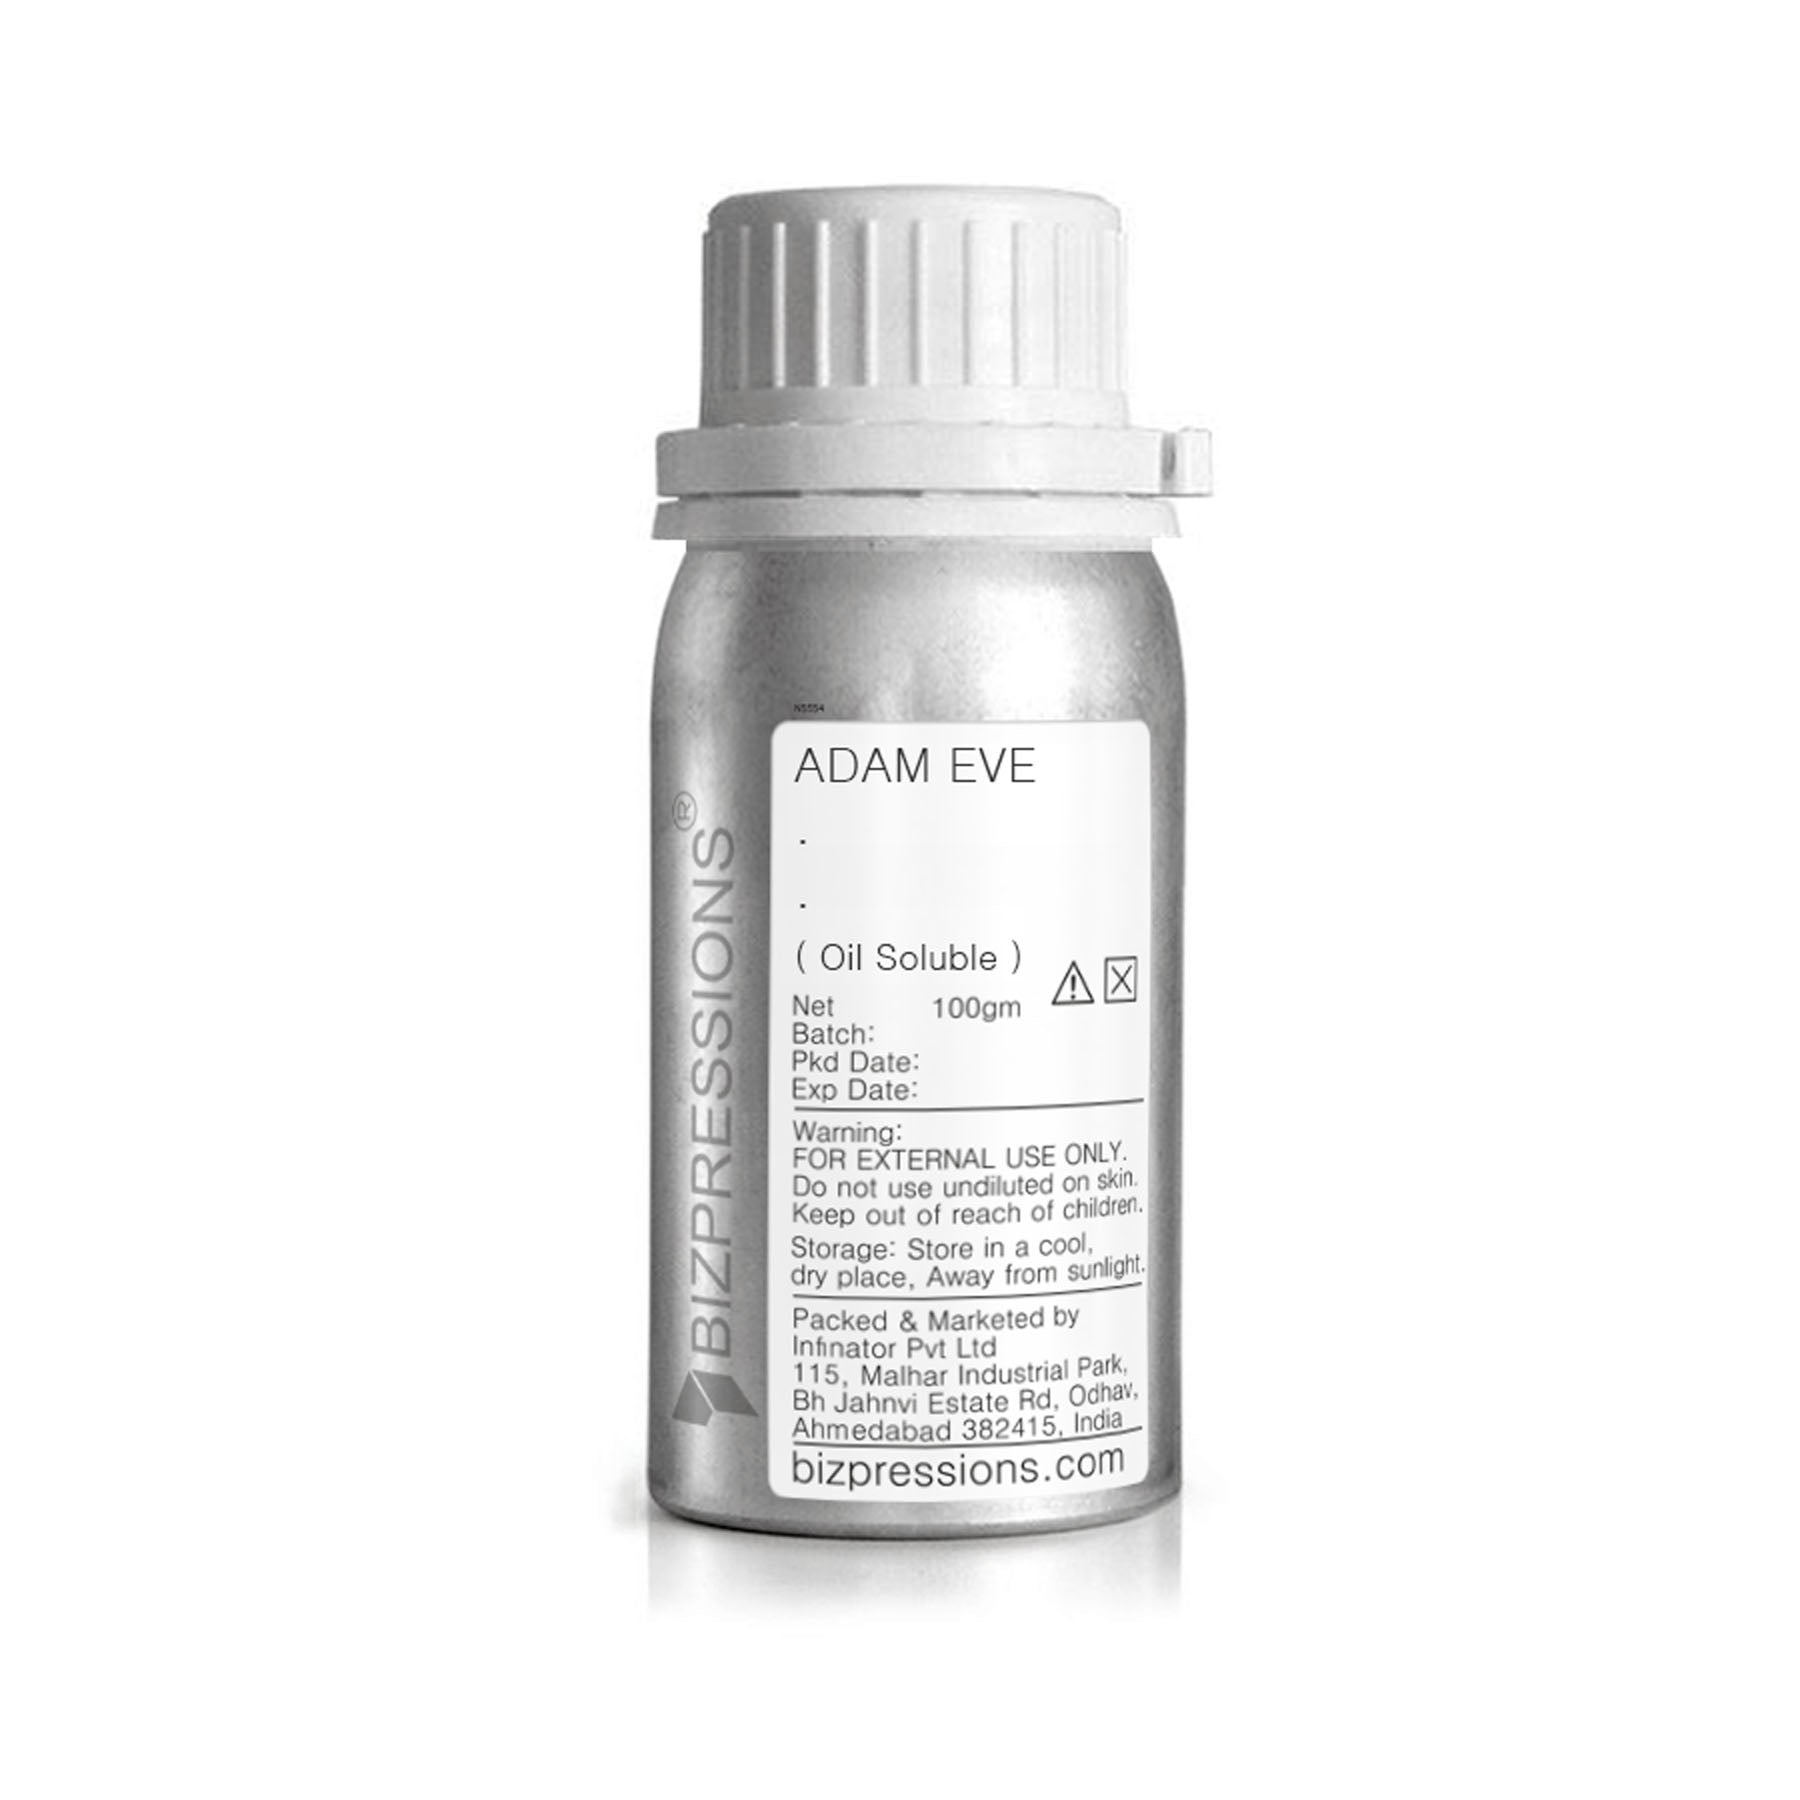 ADAM EVE - Fragrance ( Oil Soluble ) - 100 gm